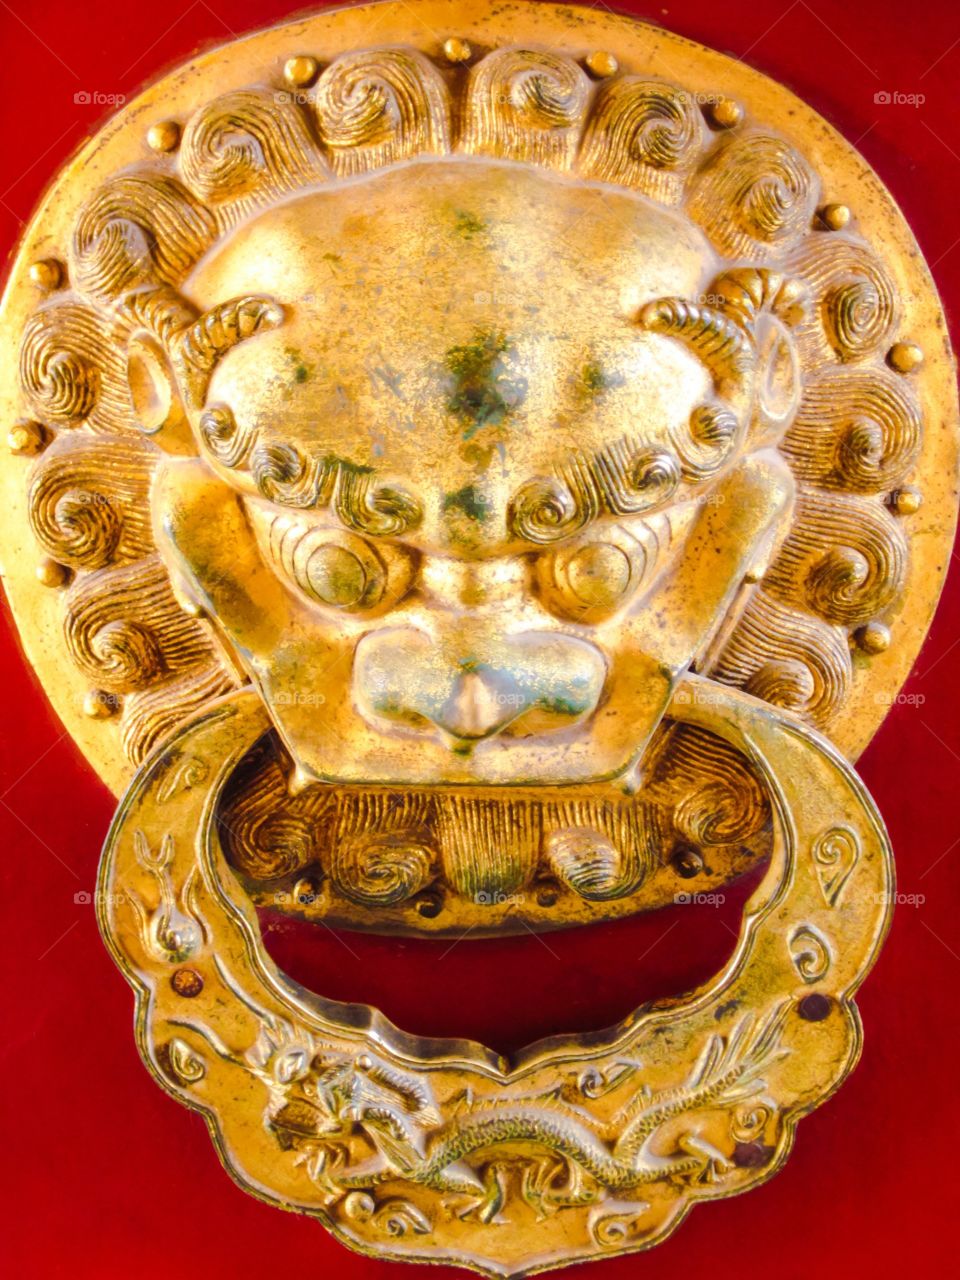 Ancient Chinese doorknob